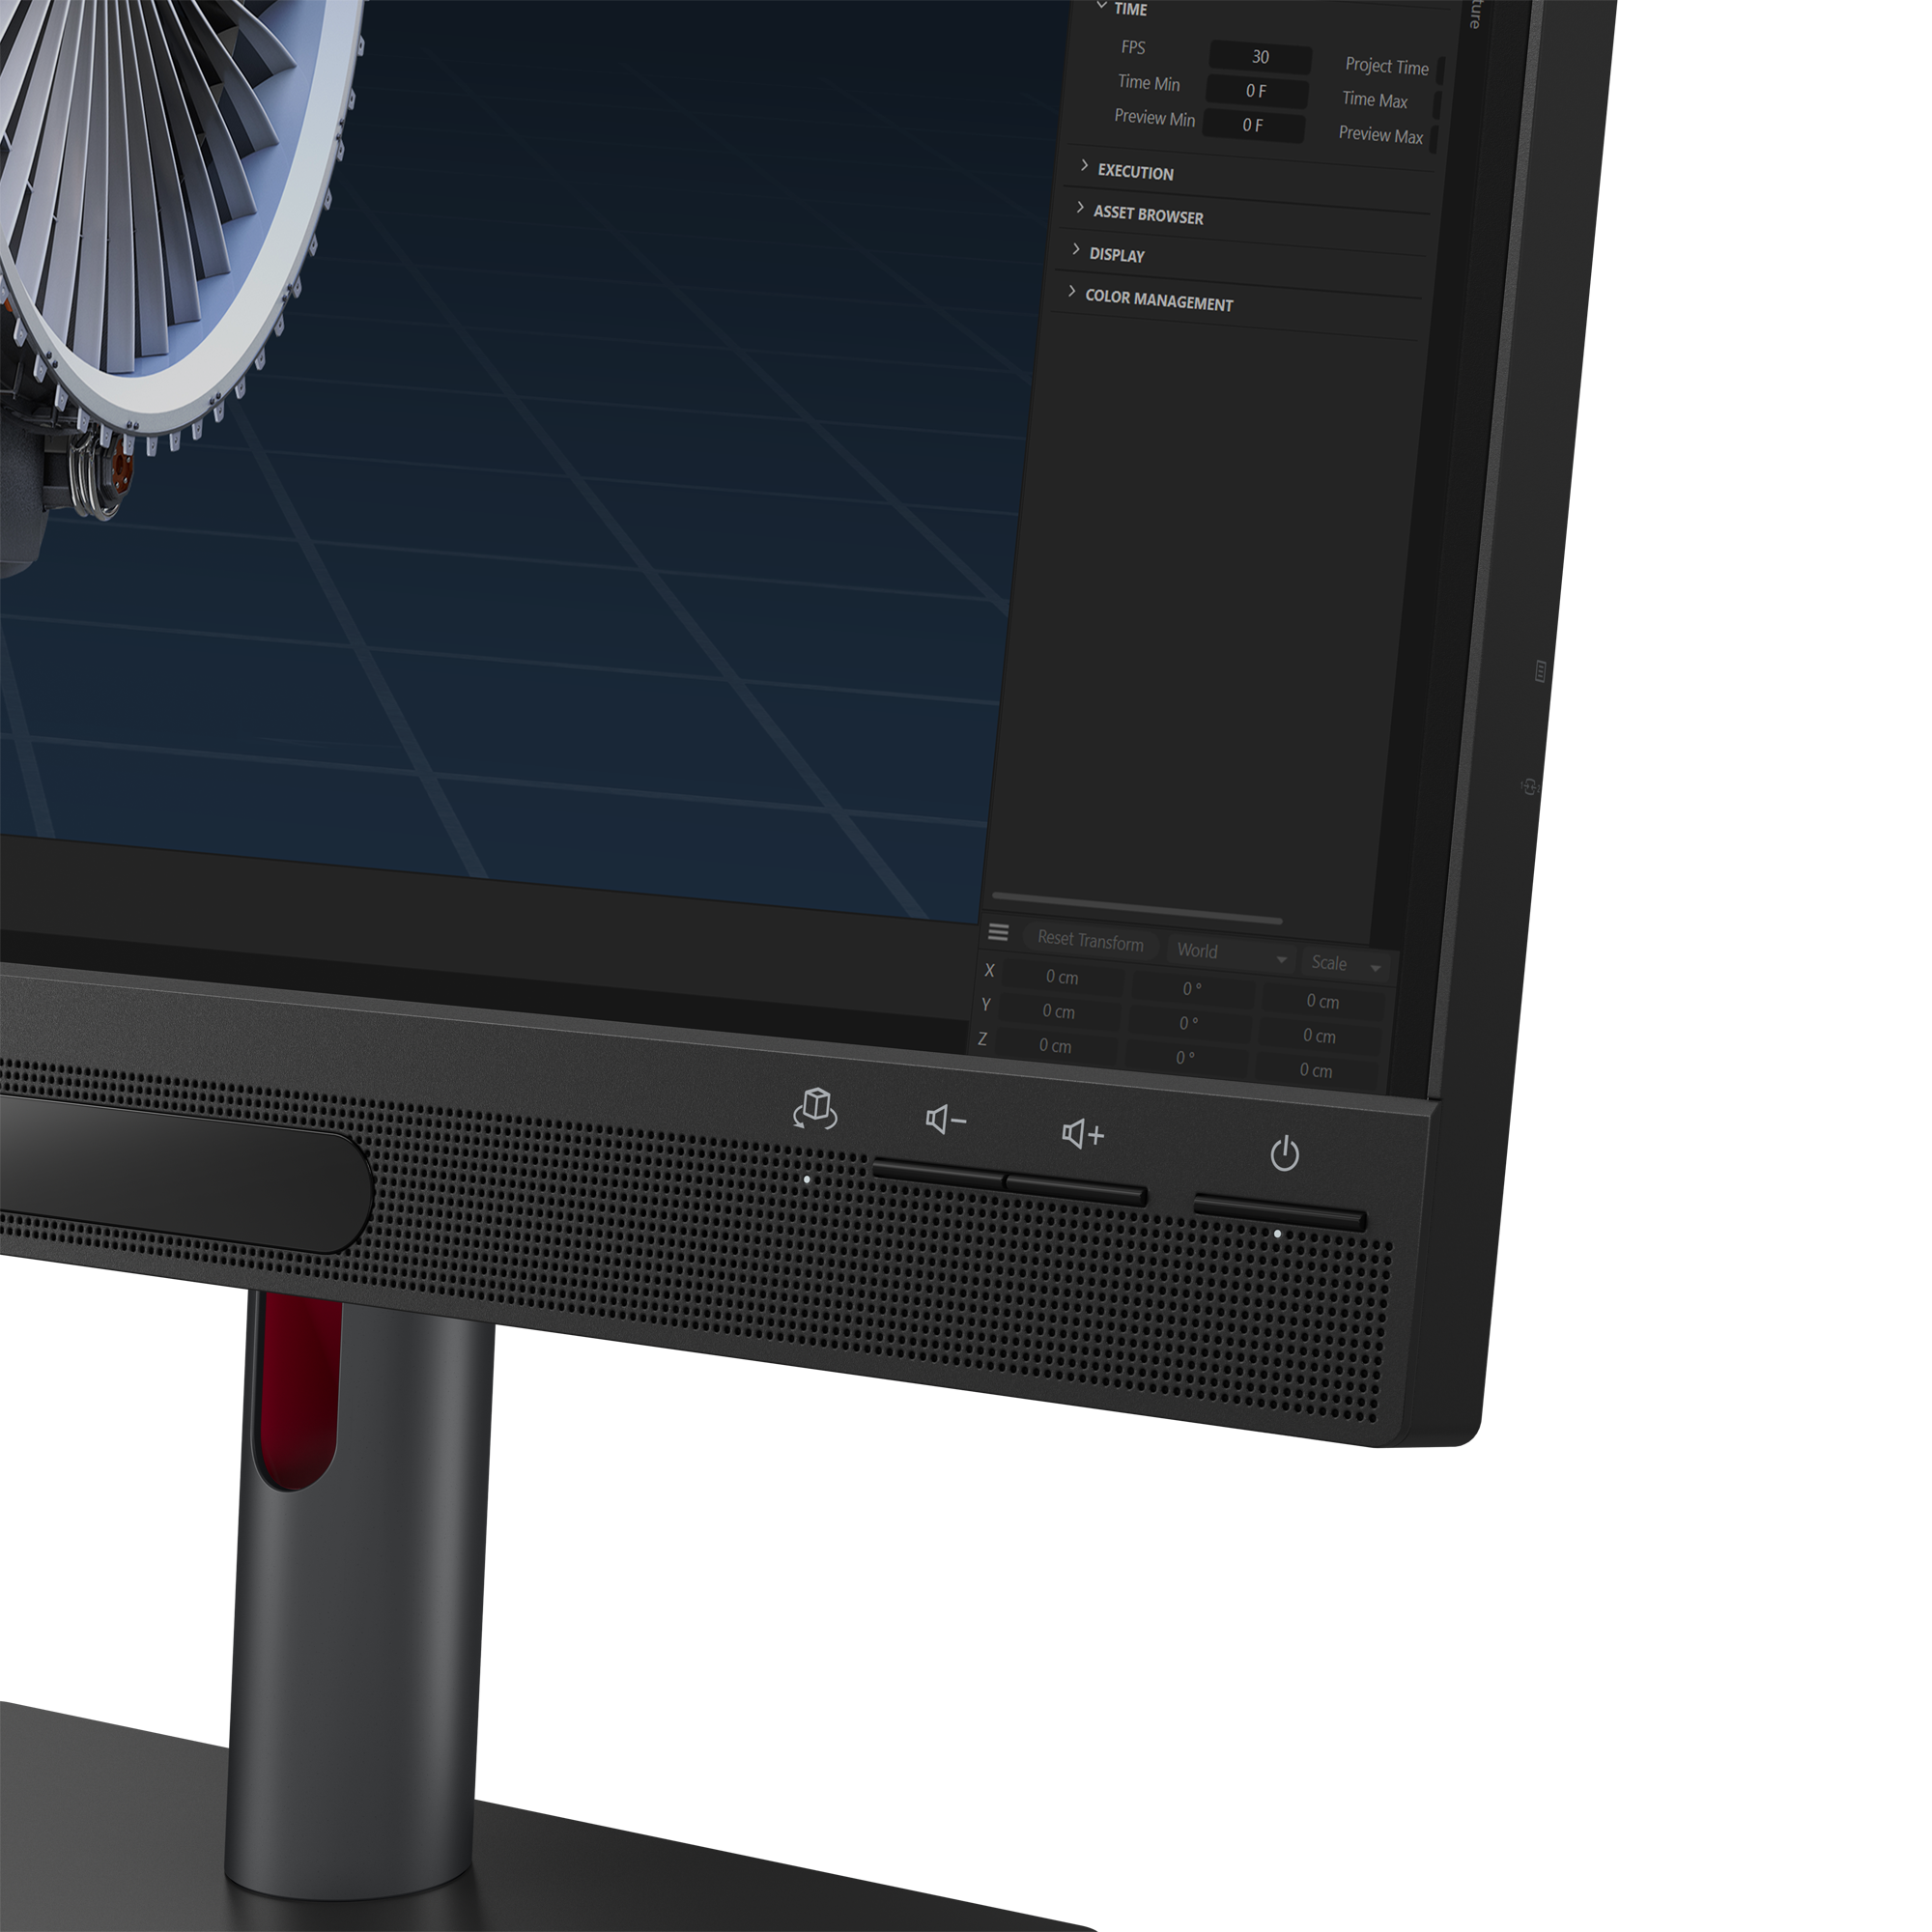 Lenovo ThinkVision 27 3D Monitor